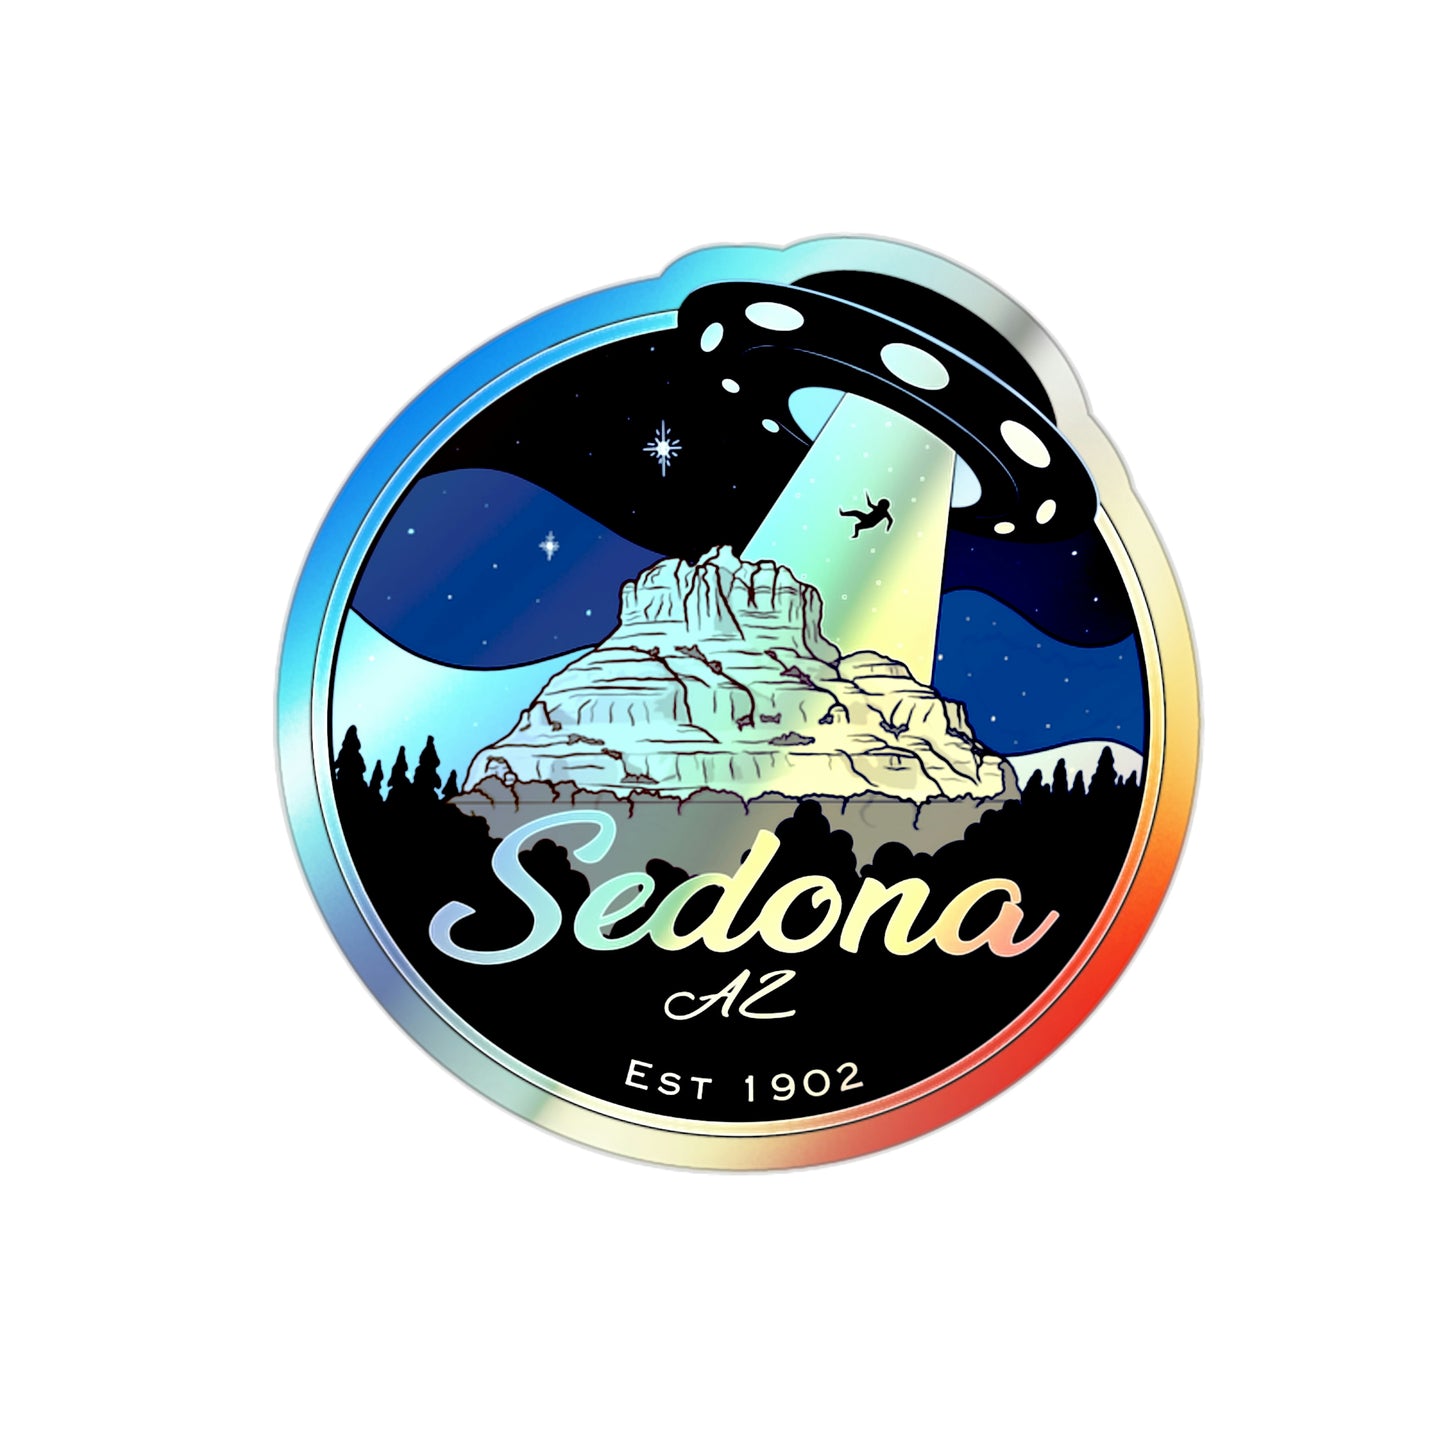 Sedona Holographic Die-cut Stickers - redrockmerchco